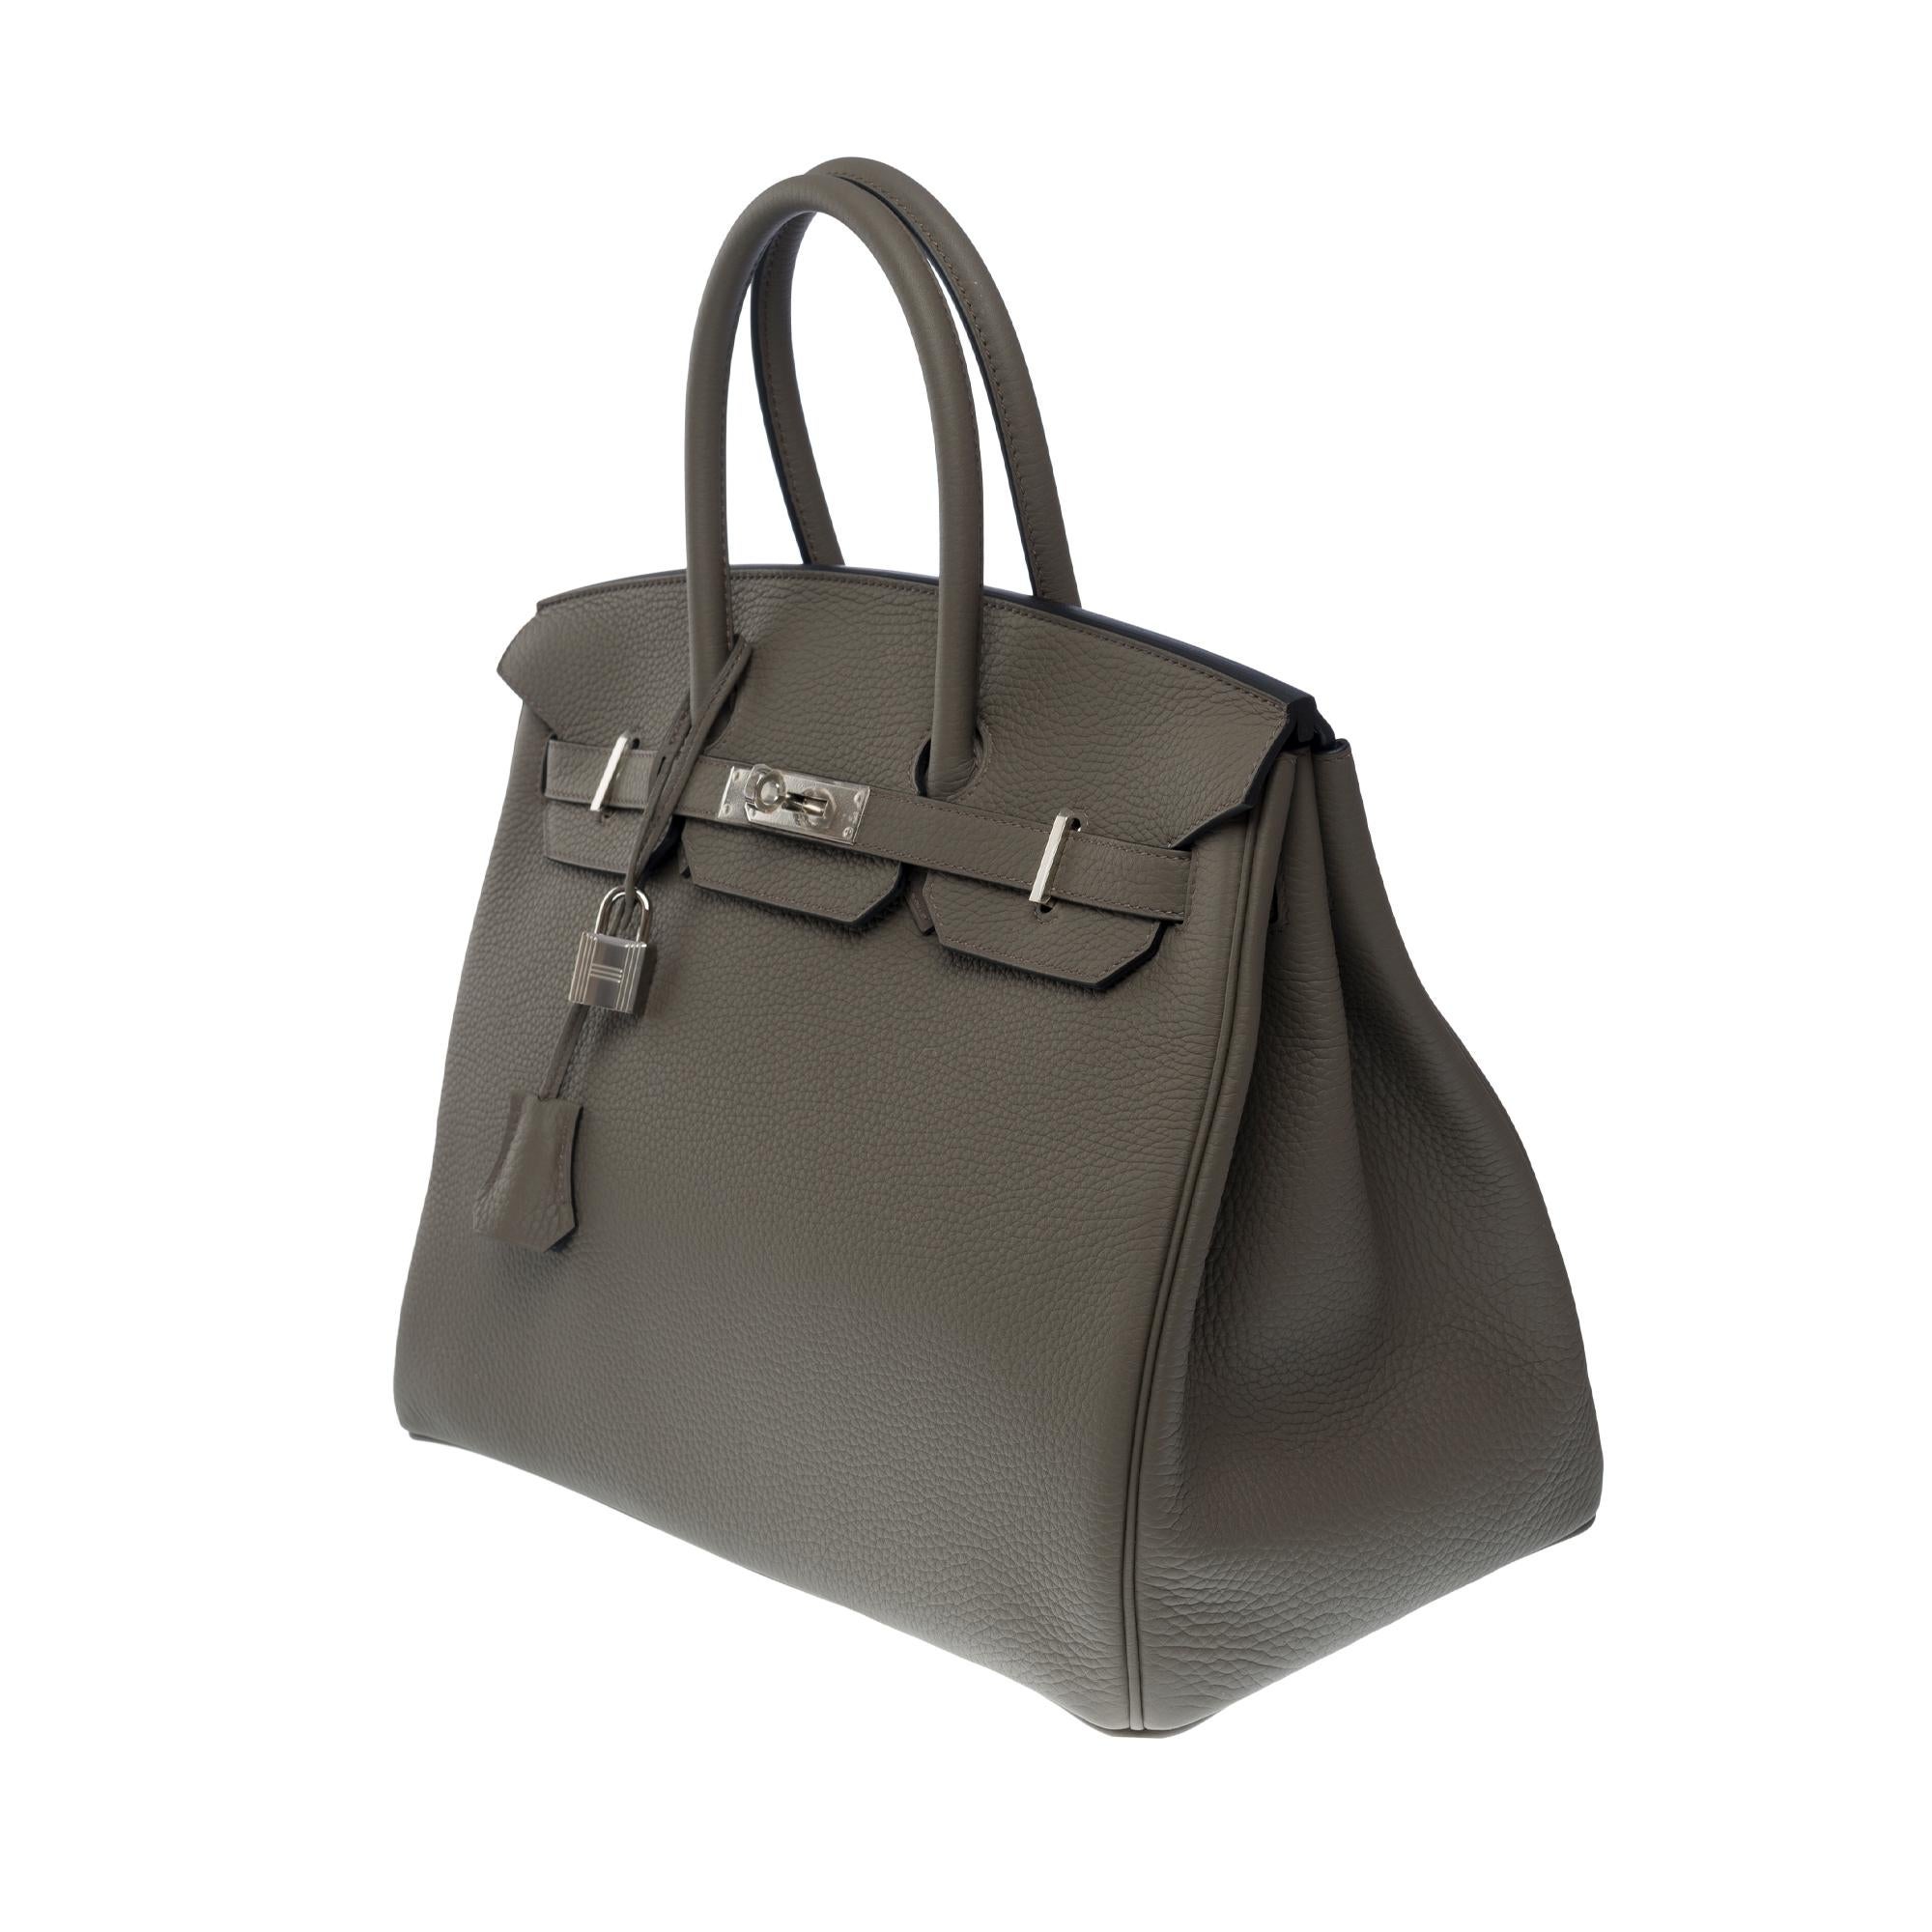 Rare Hermès Birkin 35 HSS (Special Order) handbag in Etain Togo leather, SHW 1